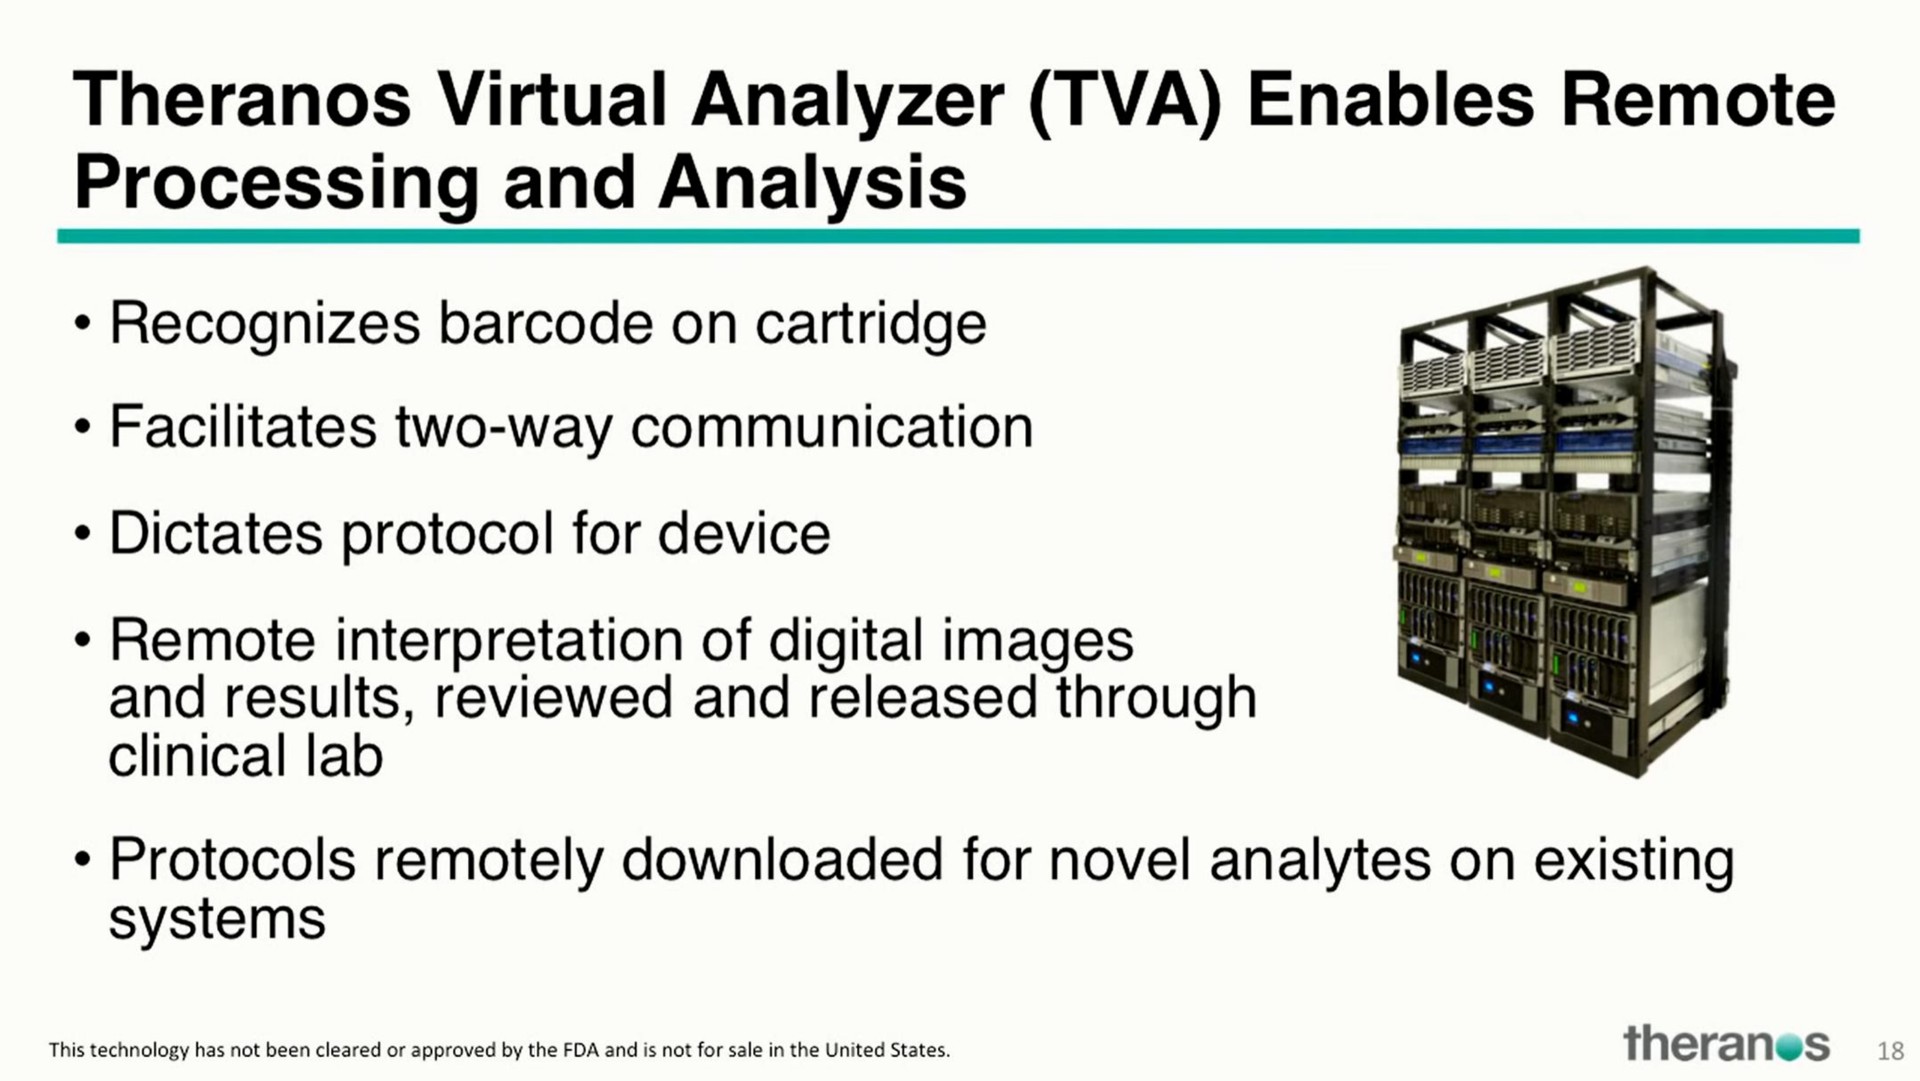 virtual analyzer enables remote processing and analysis | Theranos